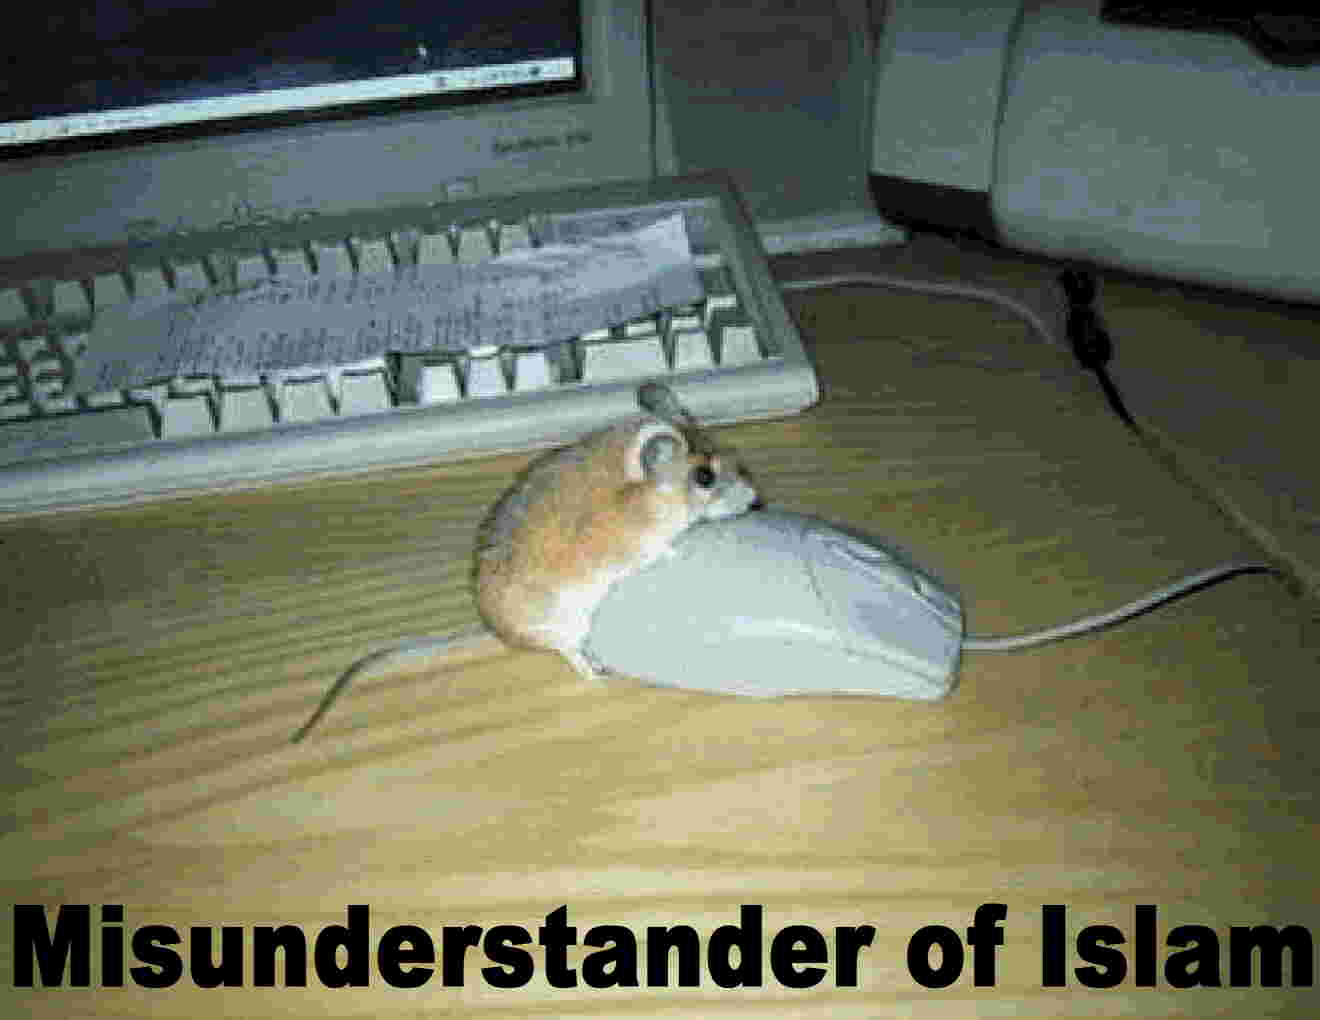 Computer mouse memes